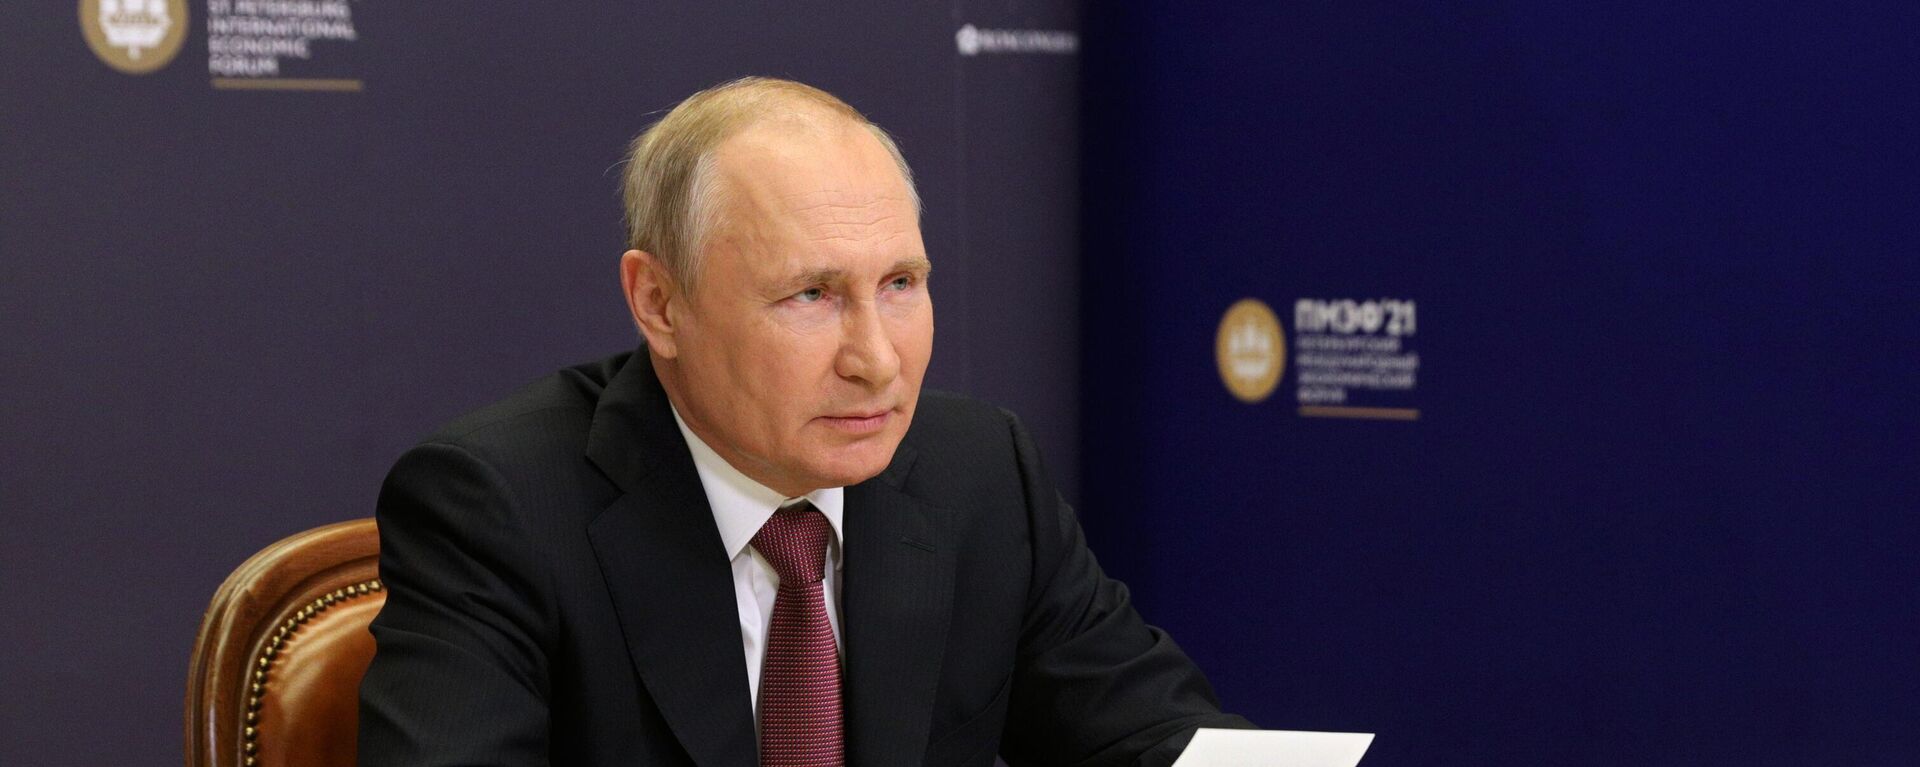 Vladímir Putin, presidente de Rusia, participa del Foro Económico de San Petersburgo - Sputnik Mundo, 1920, 04.06.2021